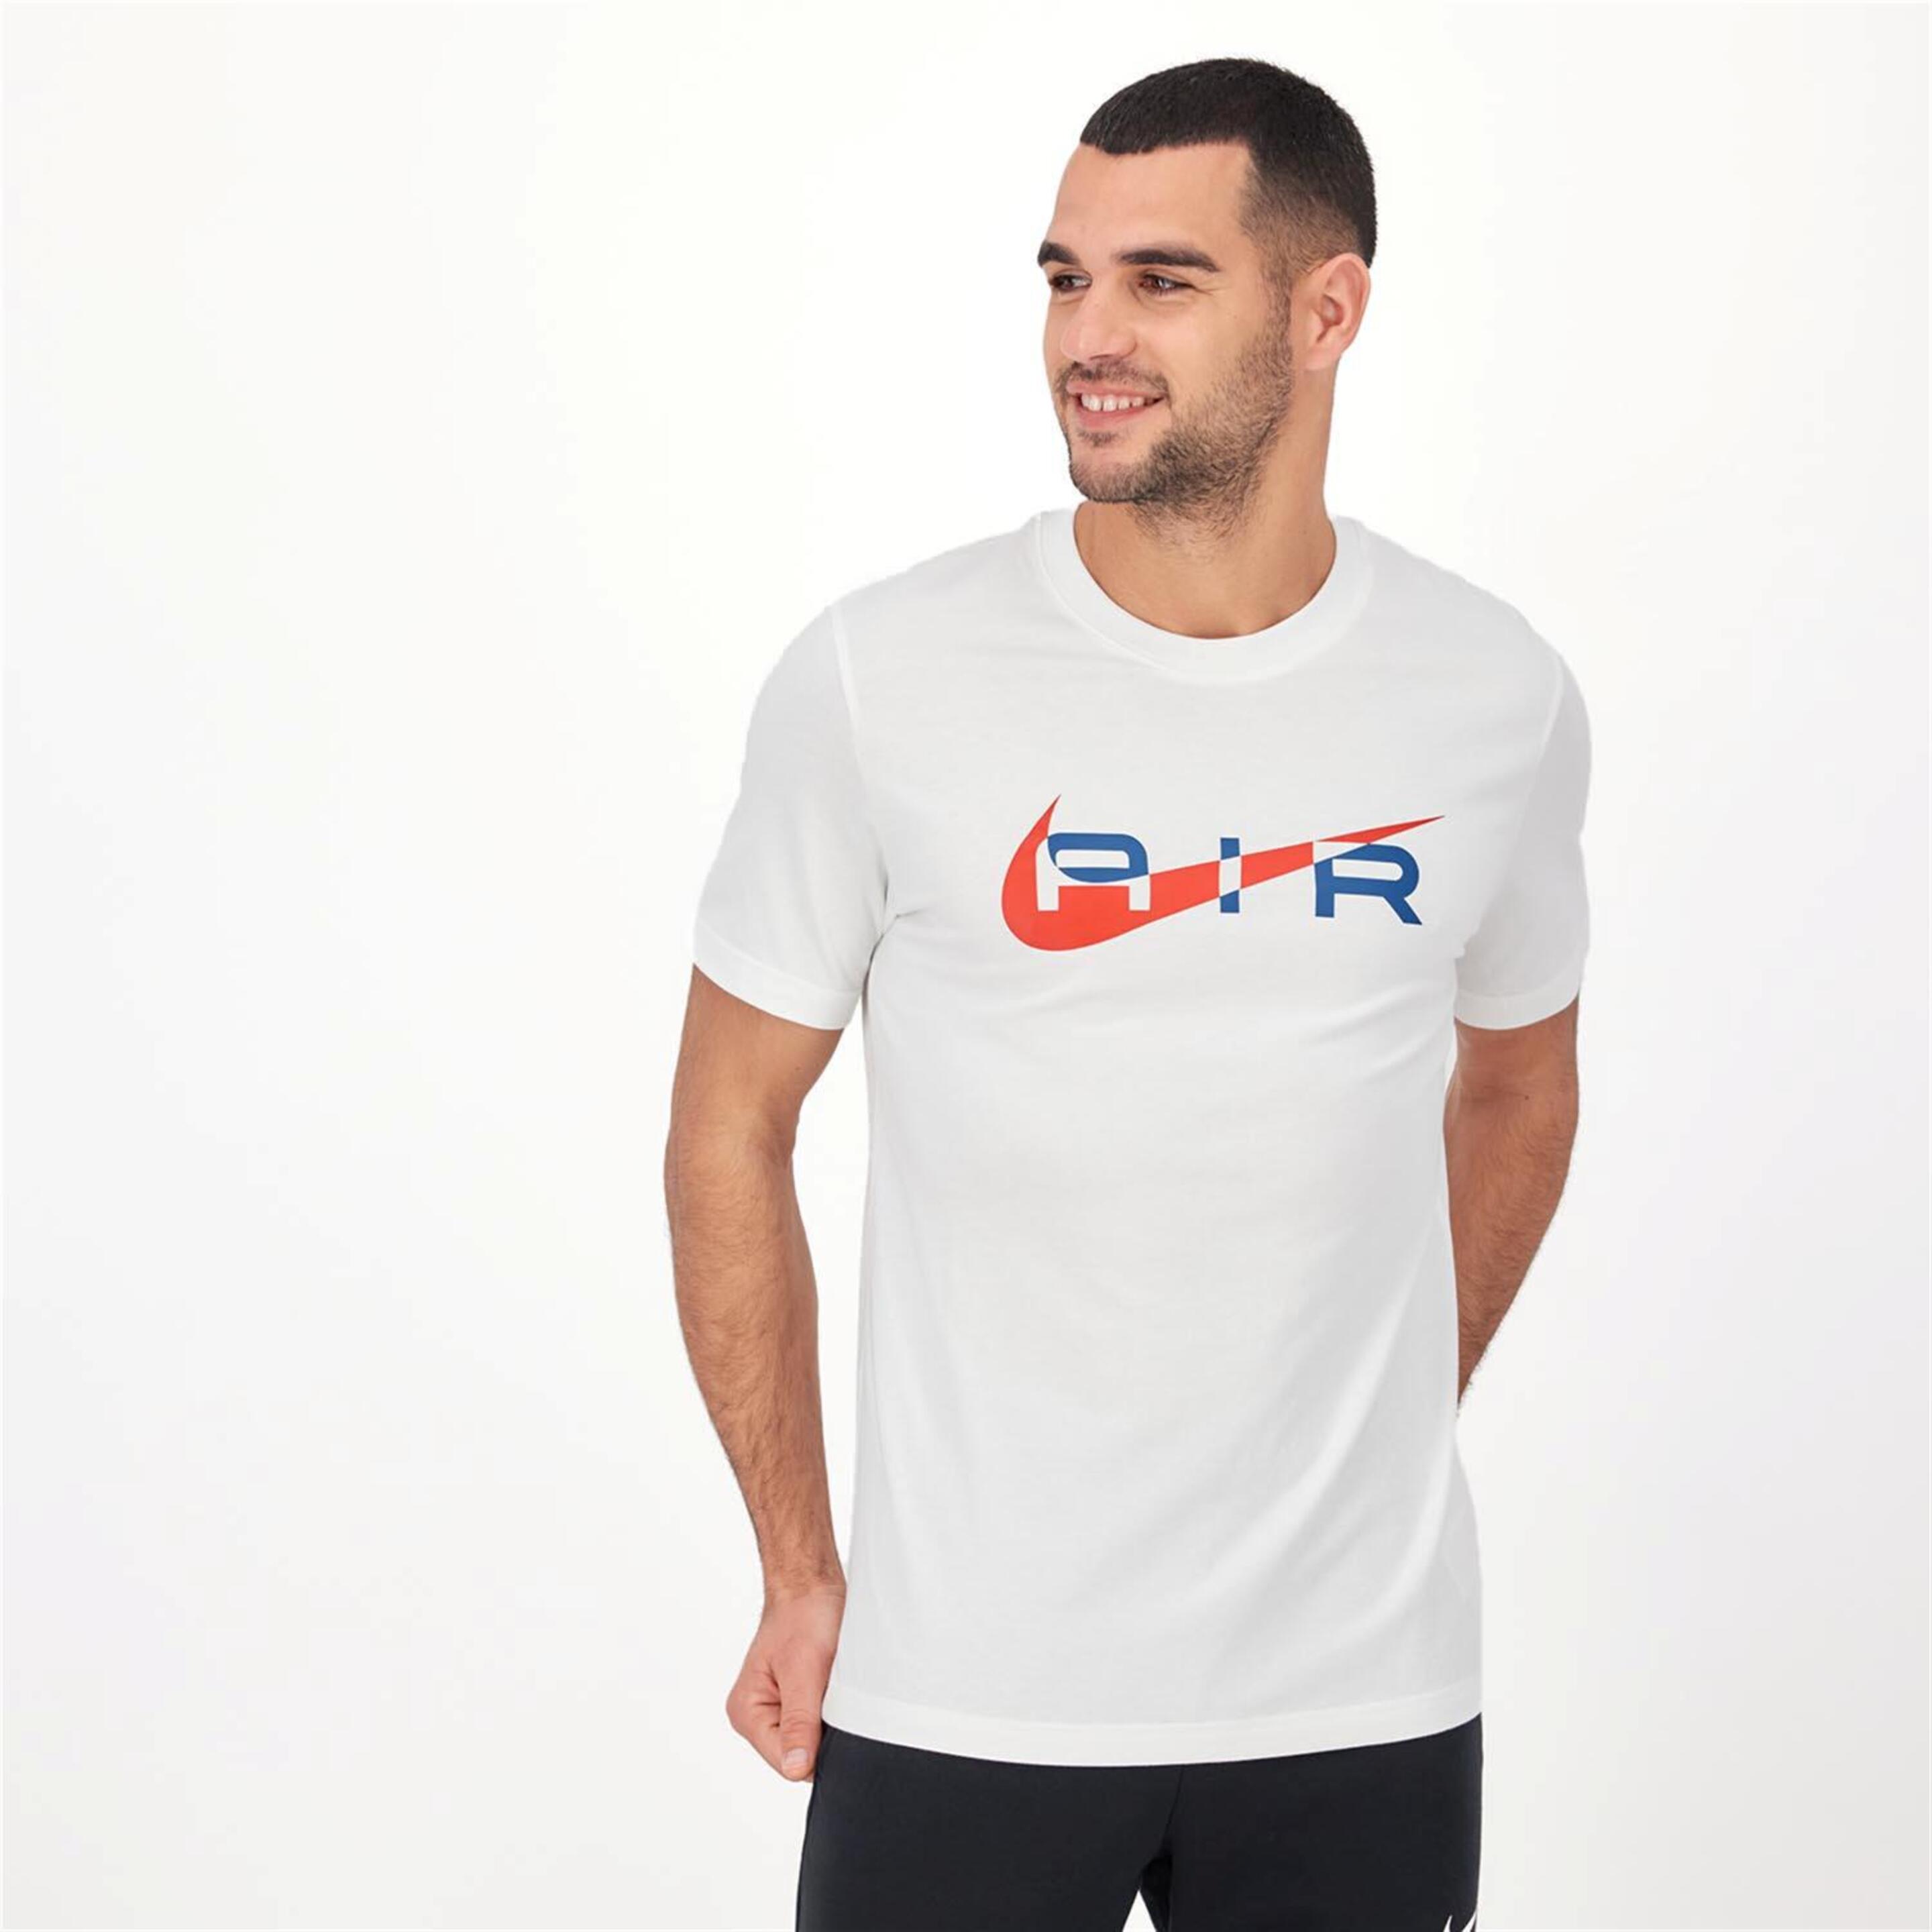 Nike Air - blanco - Camiseta Hombre